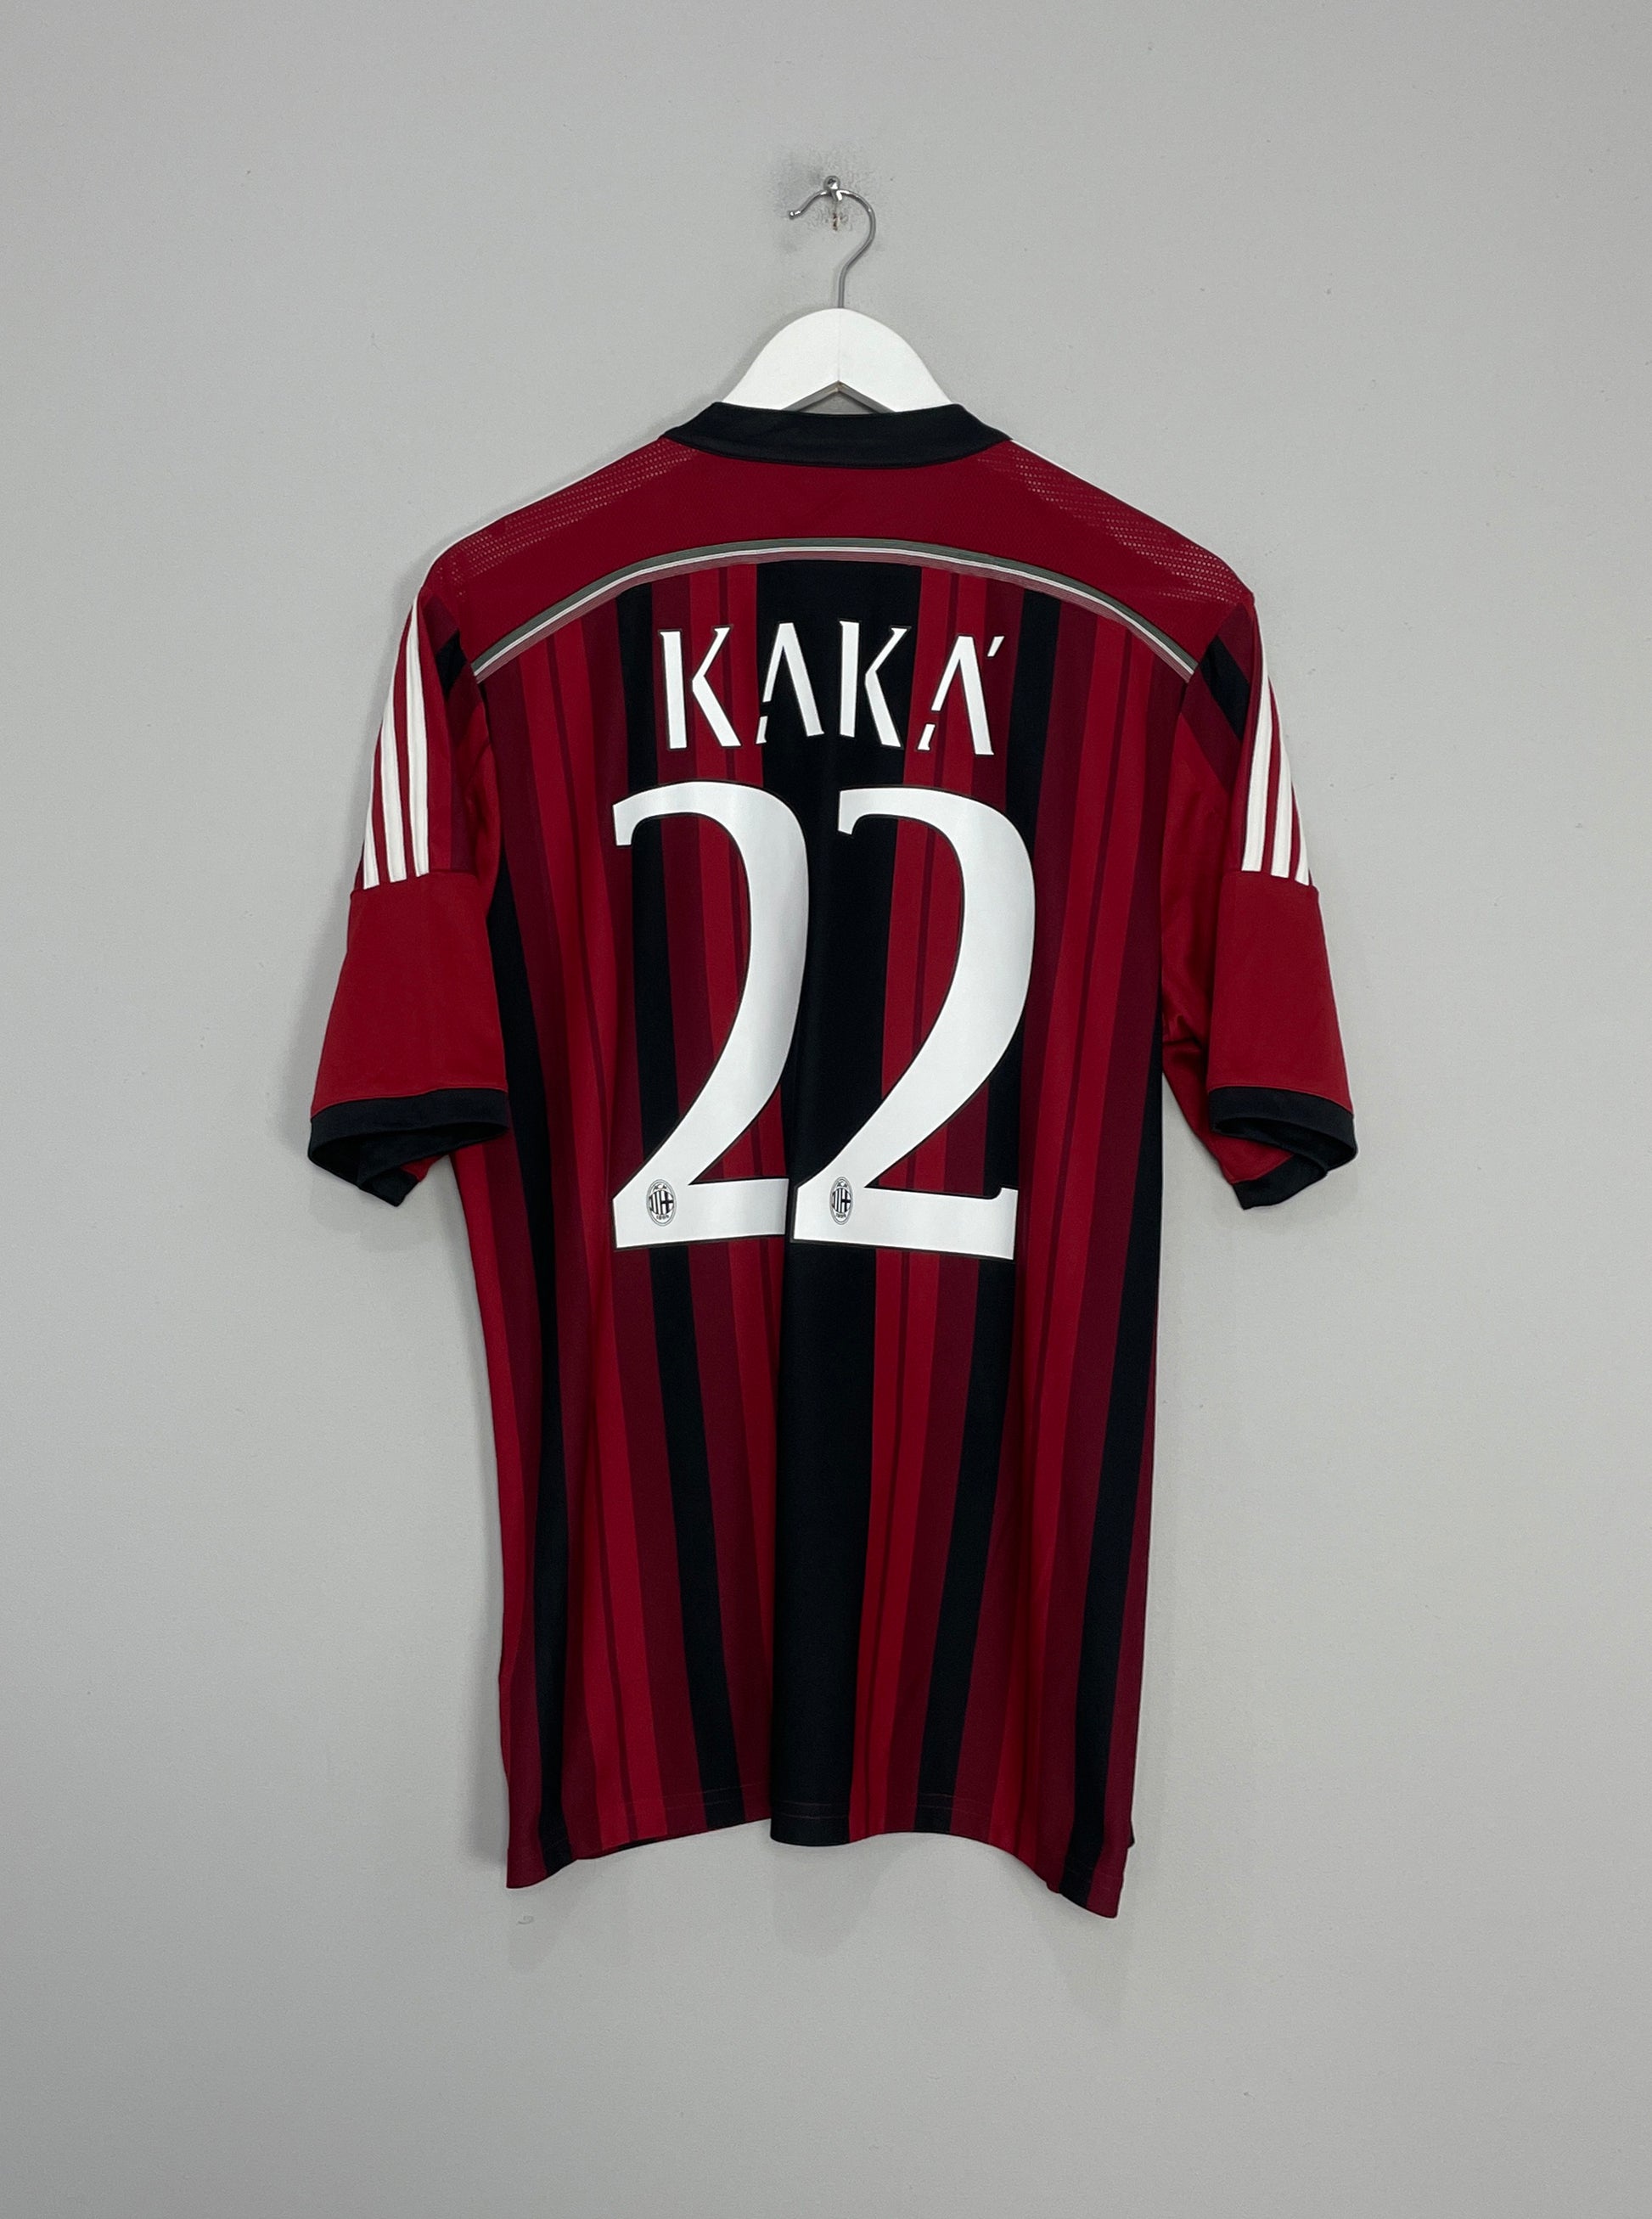 Image of the AC Milan Kaka shirt from the 2014/15 season